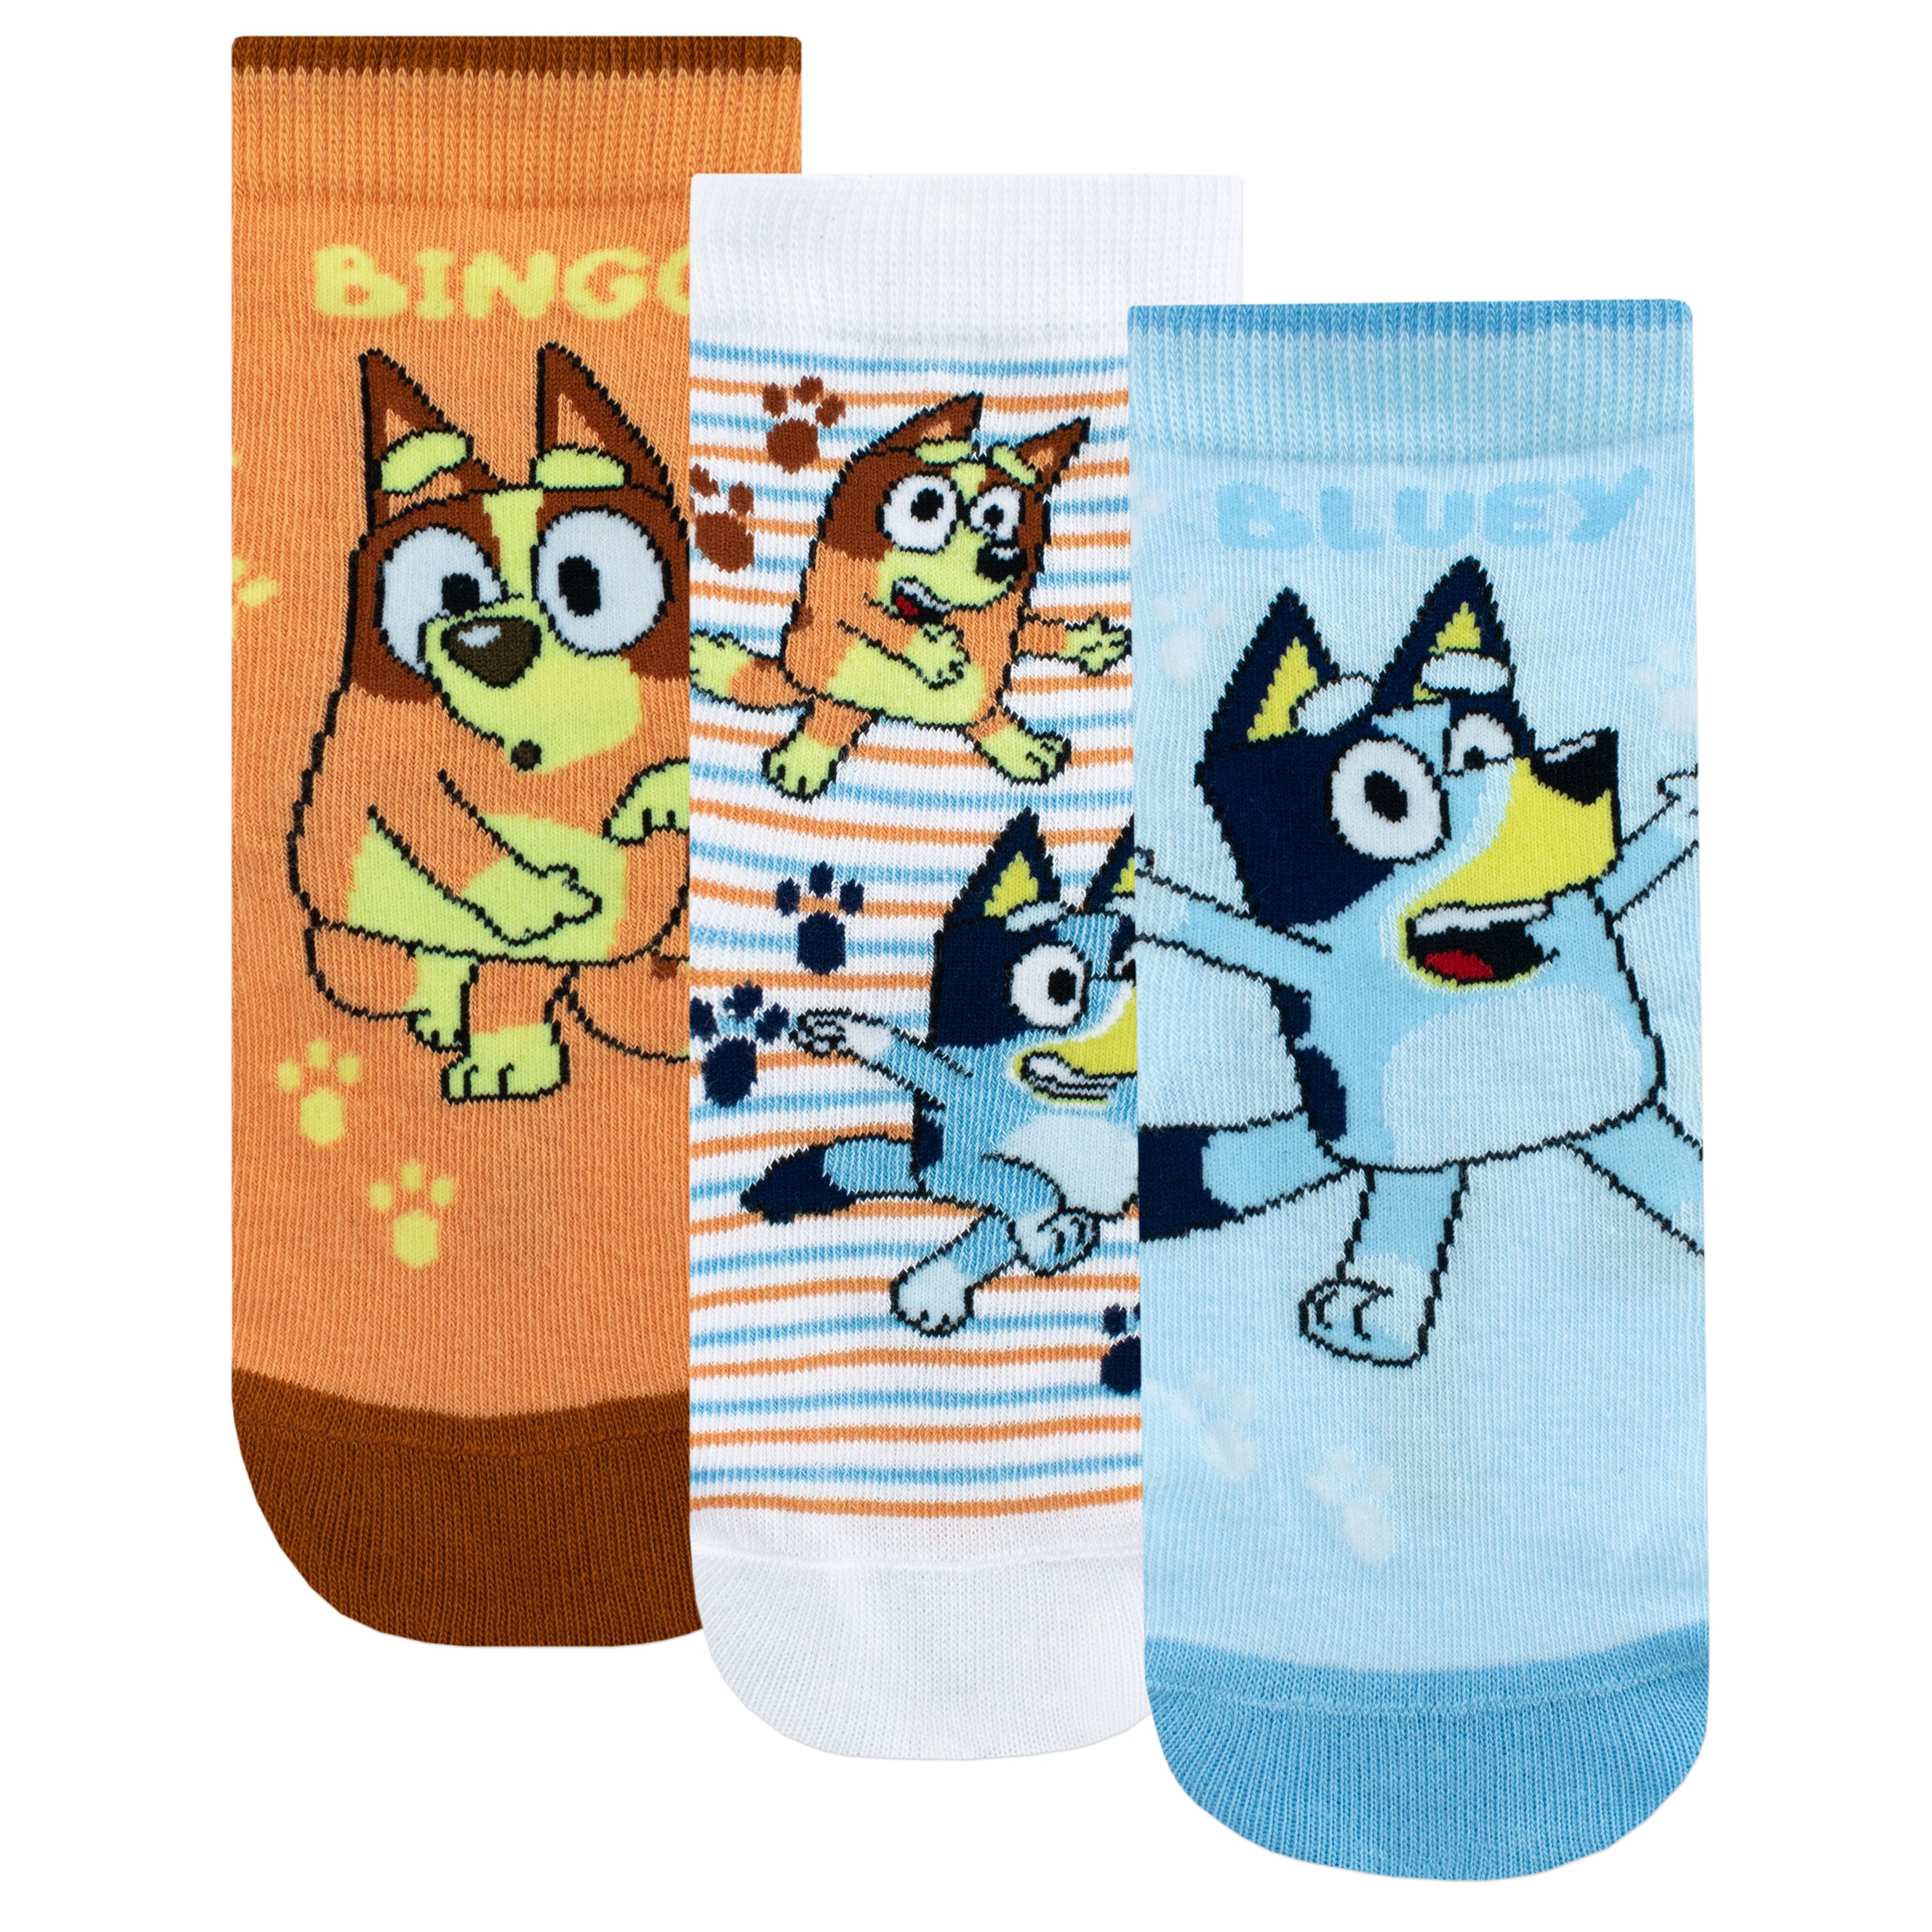 Bluey Socks 3 Pack Kids  Official Character.com Merchandise